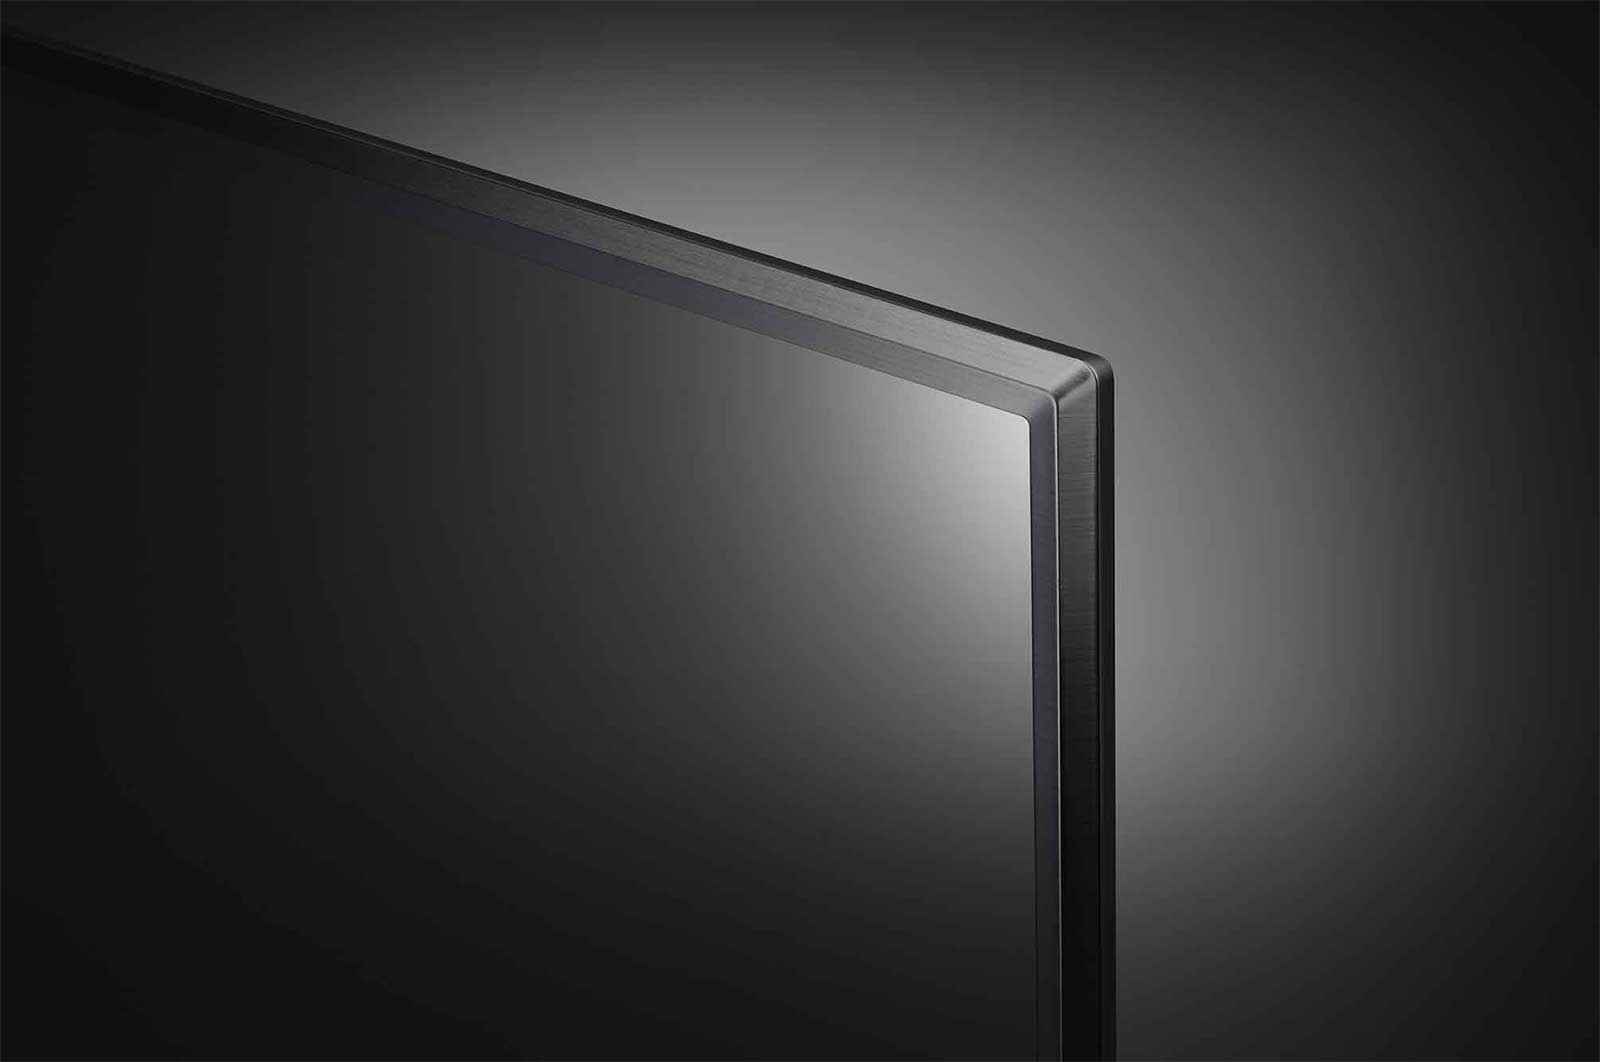 LG UP75 inch 4K Smart UHD TV